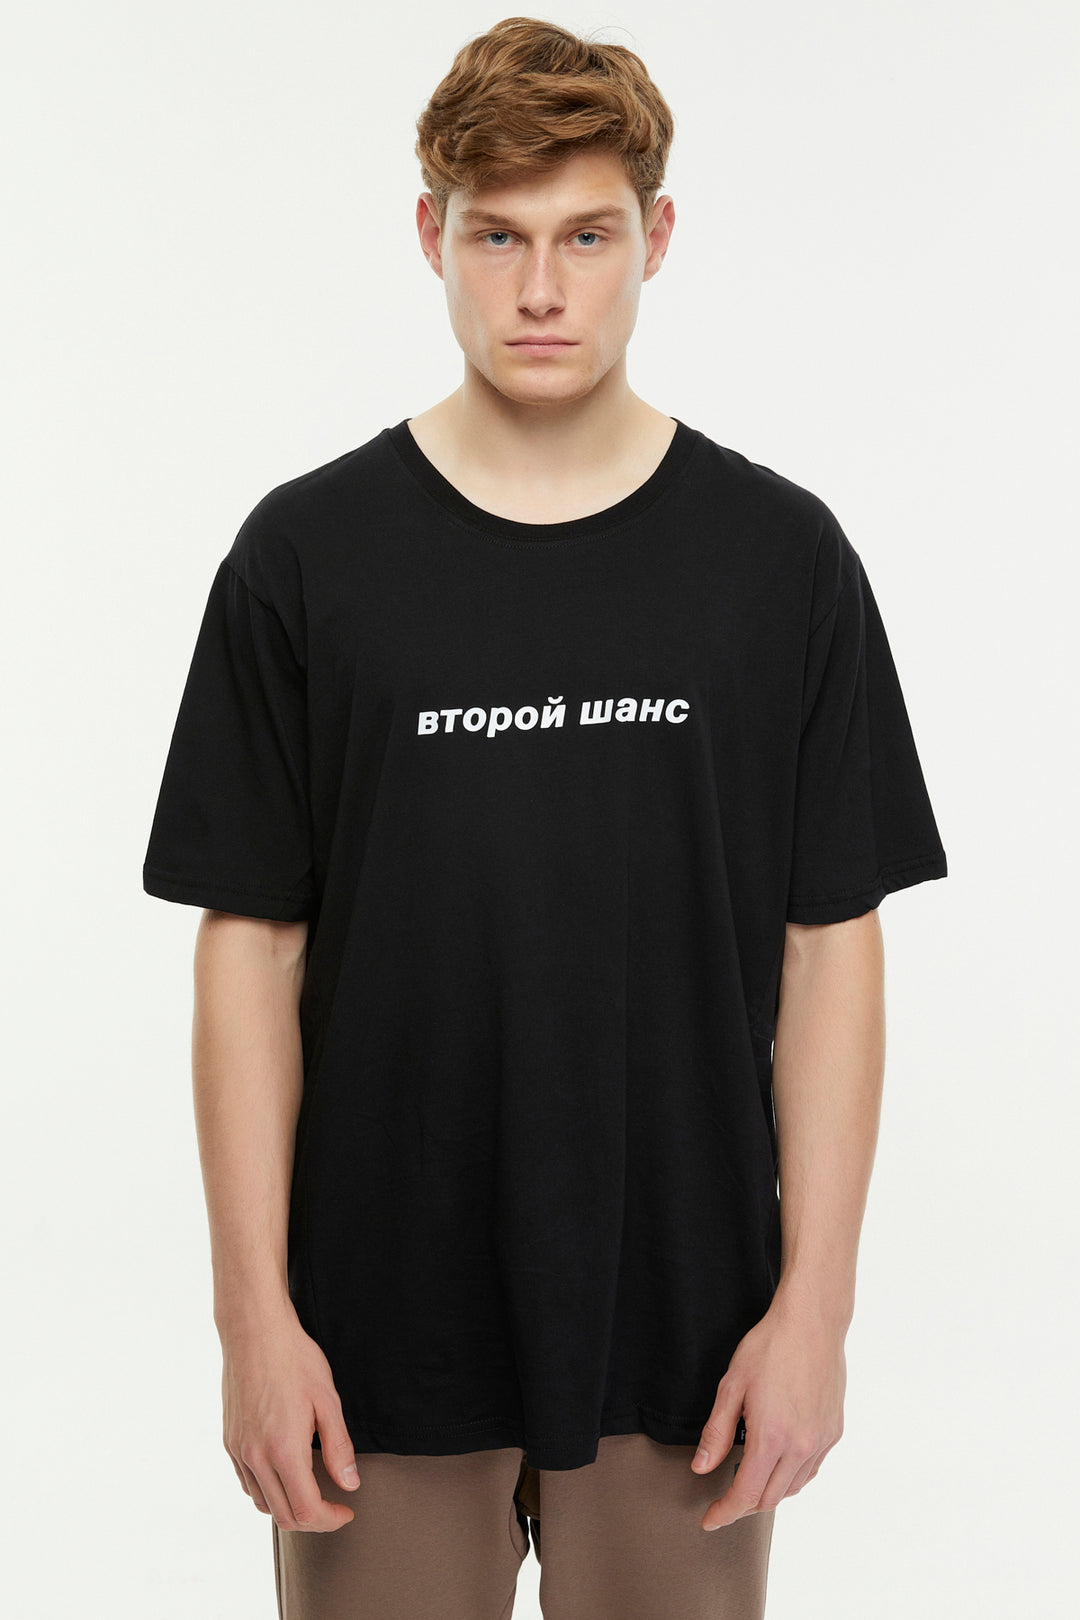 Second Chance / Oversize T-shirt